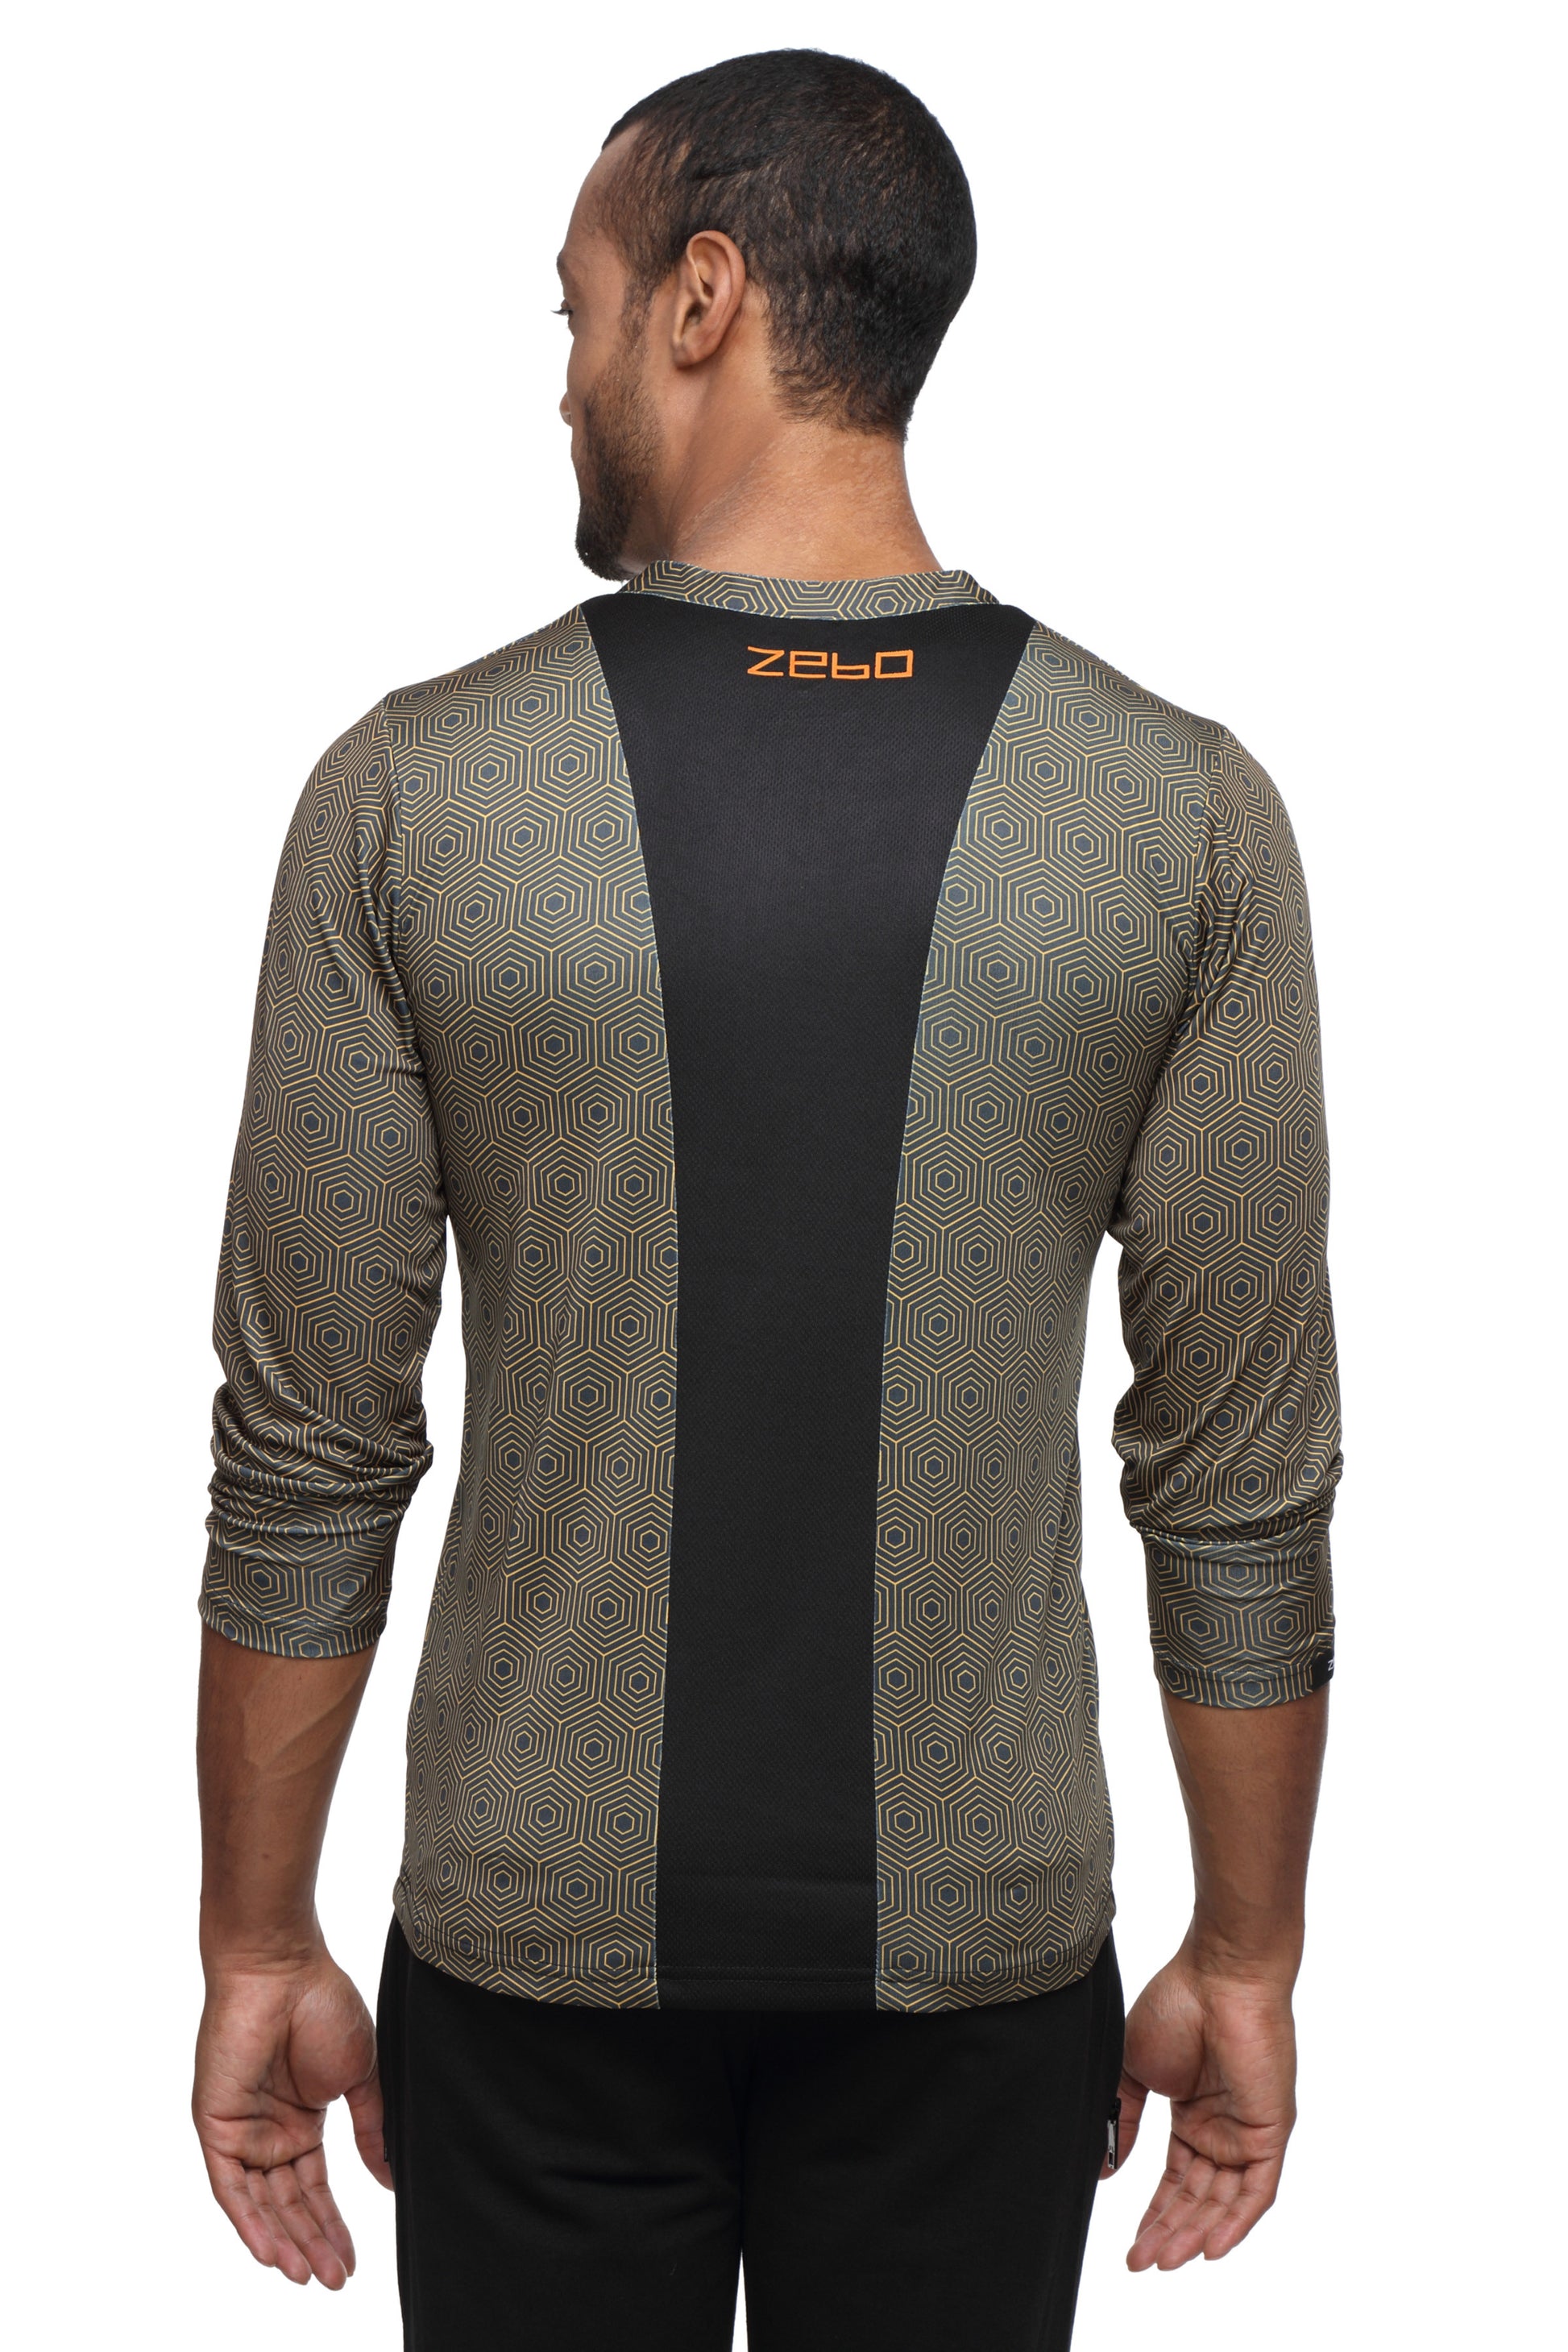 PERFORMA+ GeoHex full sleeve Henley - Zebo Active Wear